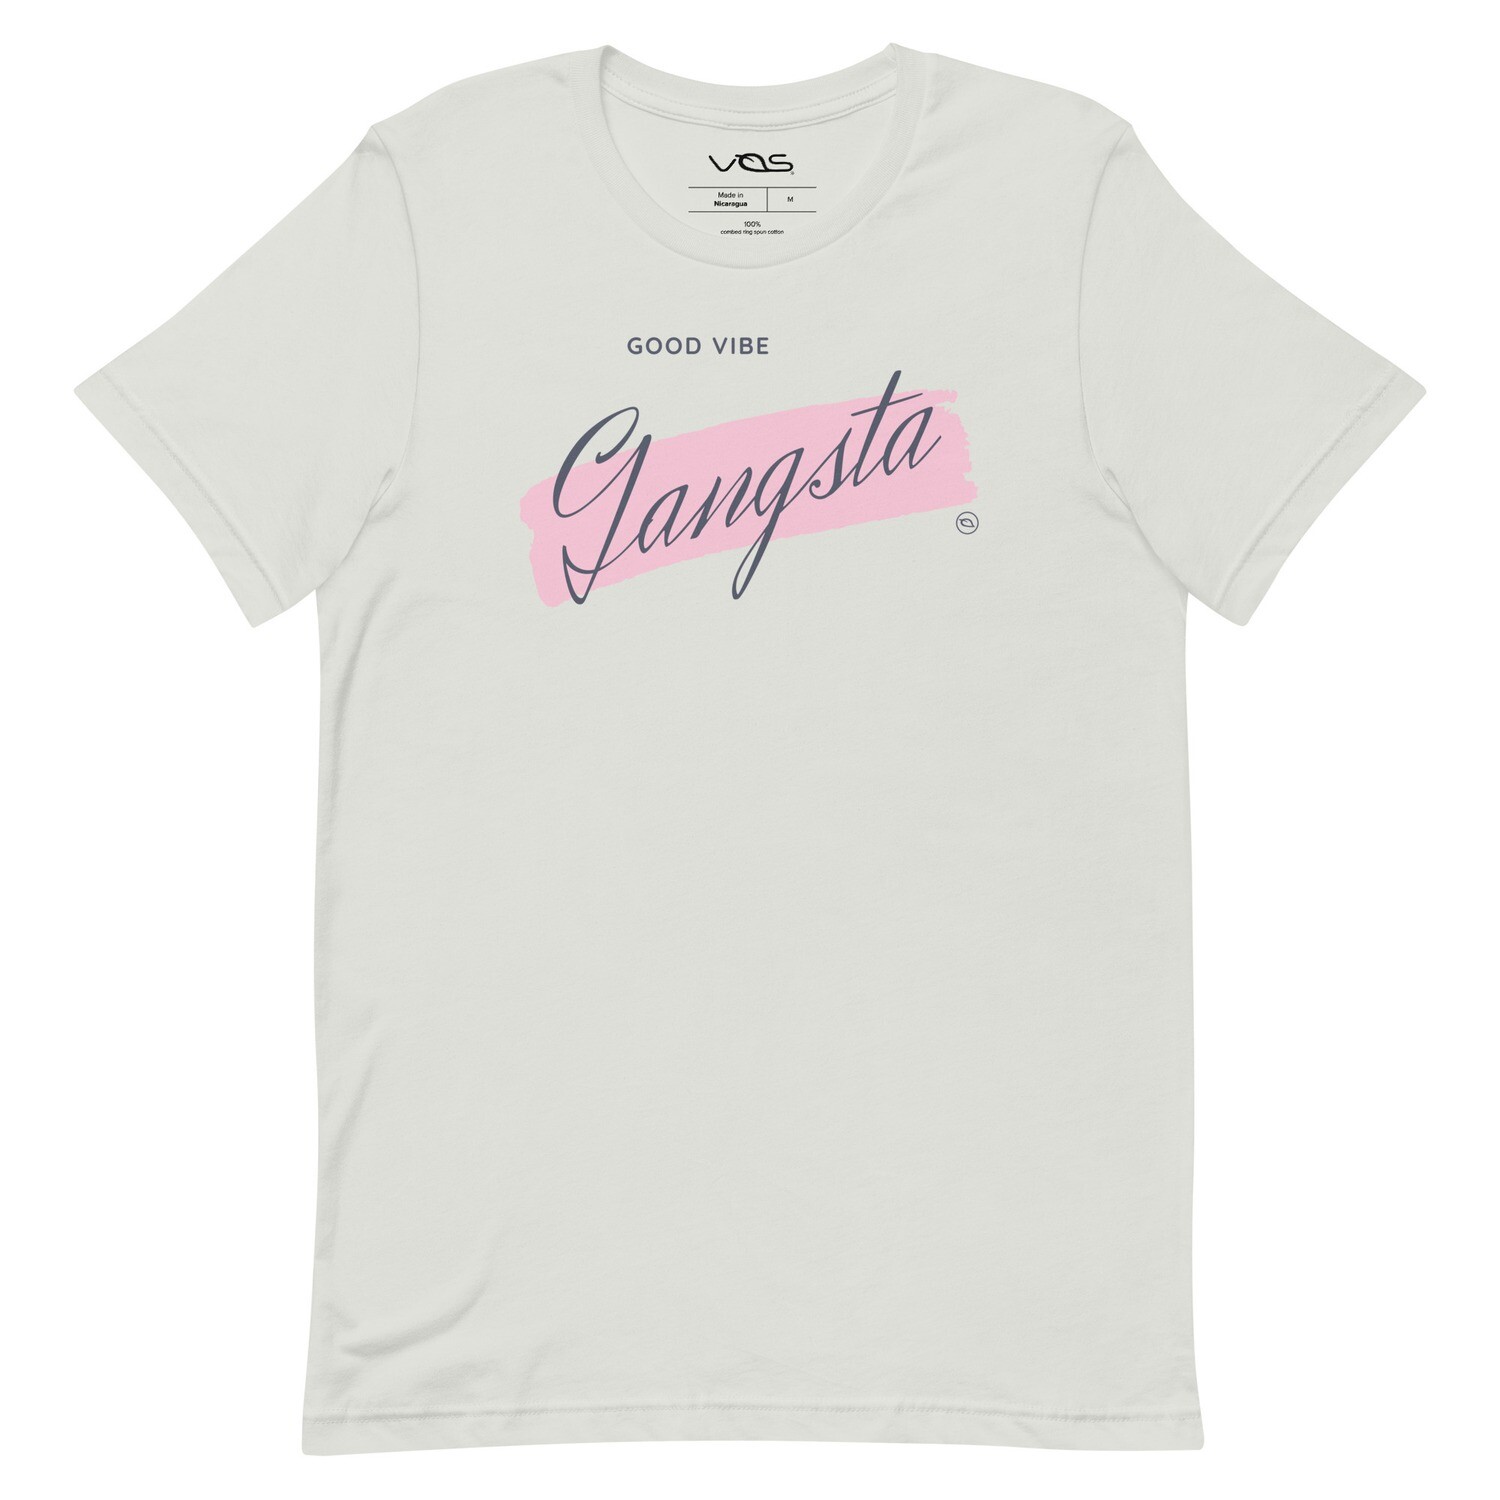 Good Vibe Gangsta | VOS | Confident T-Shirt